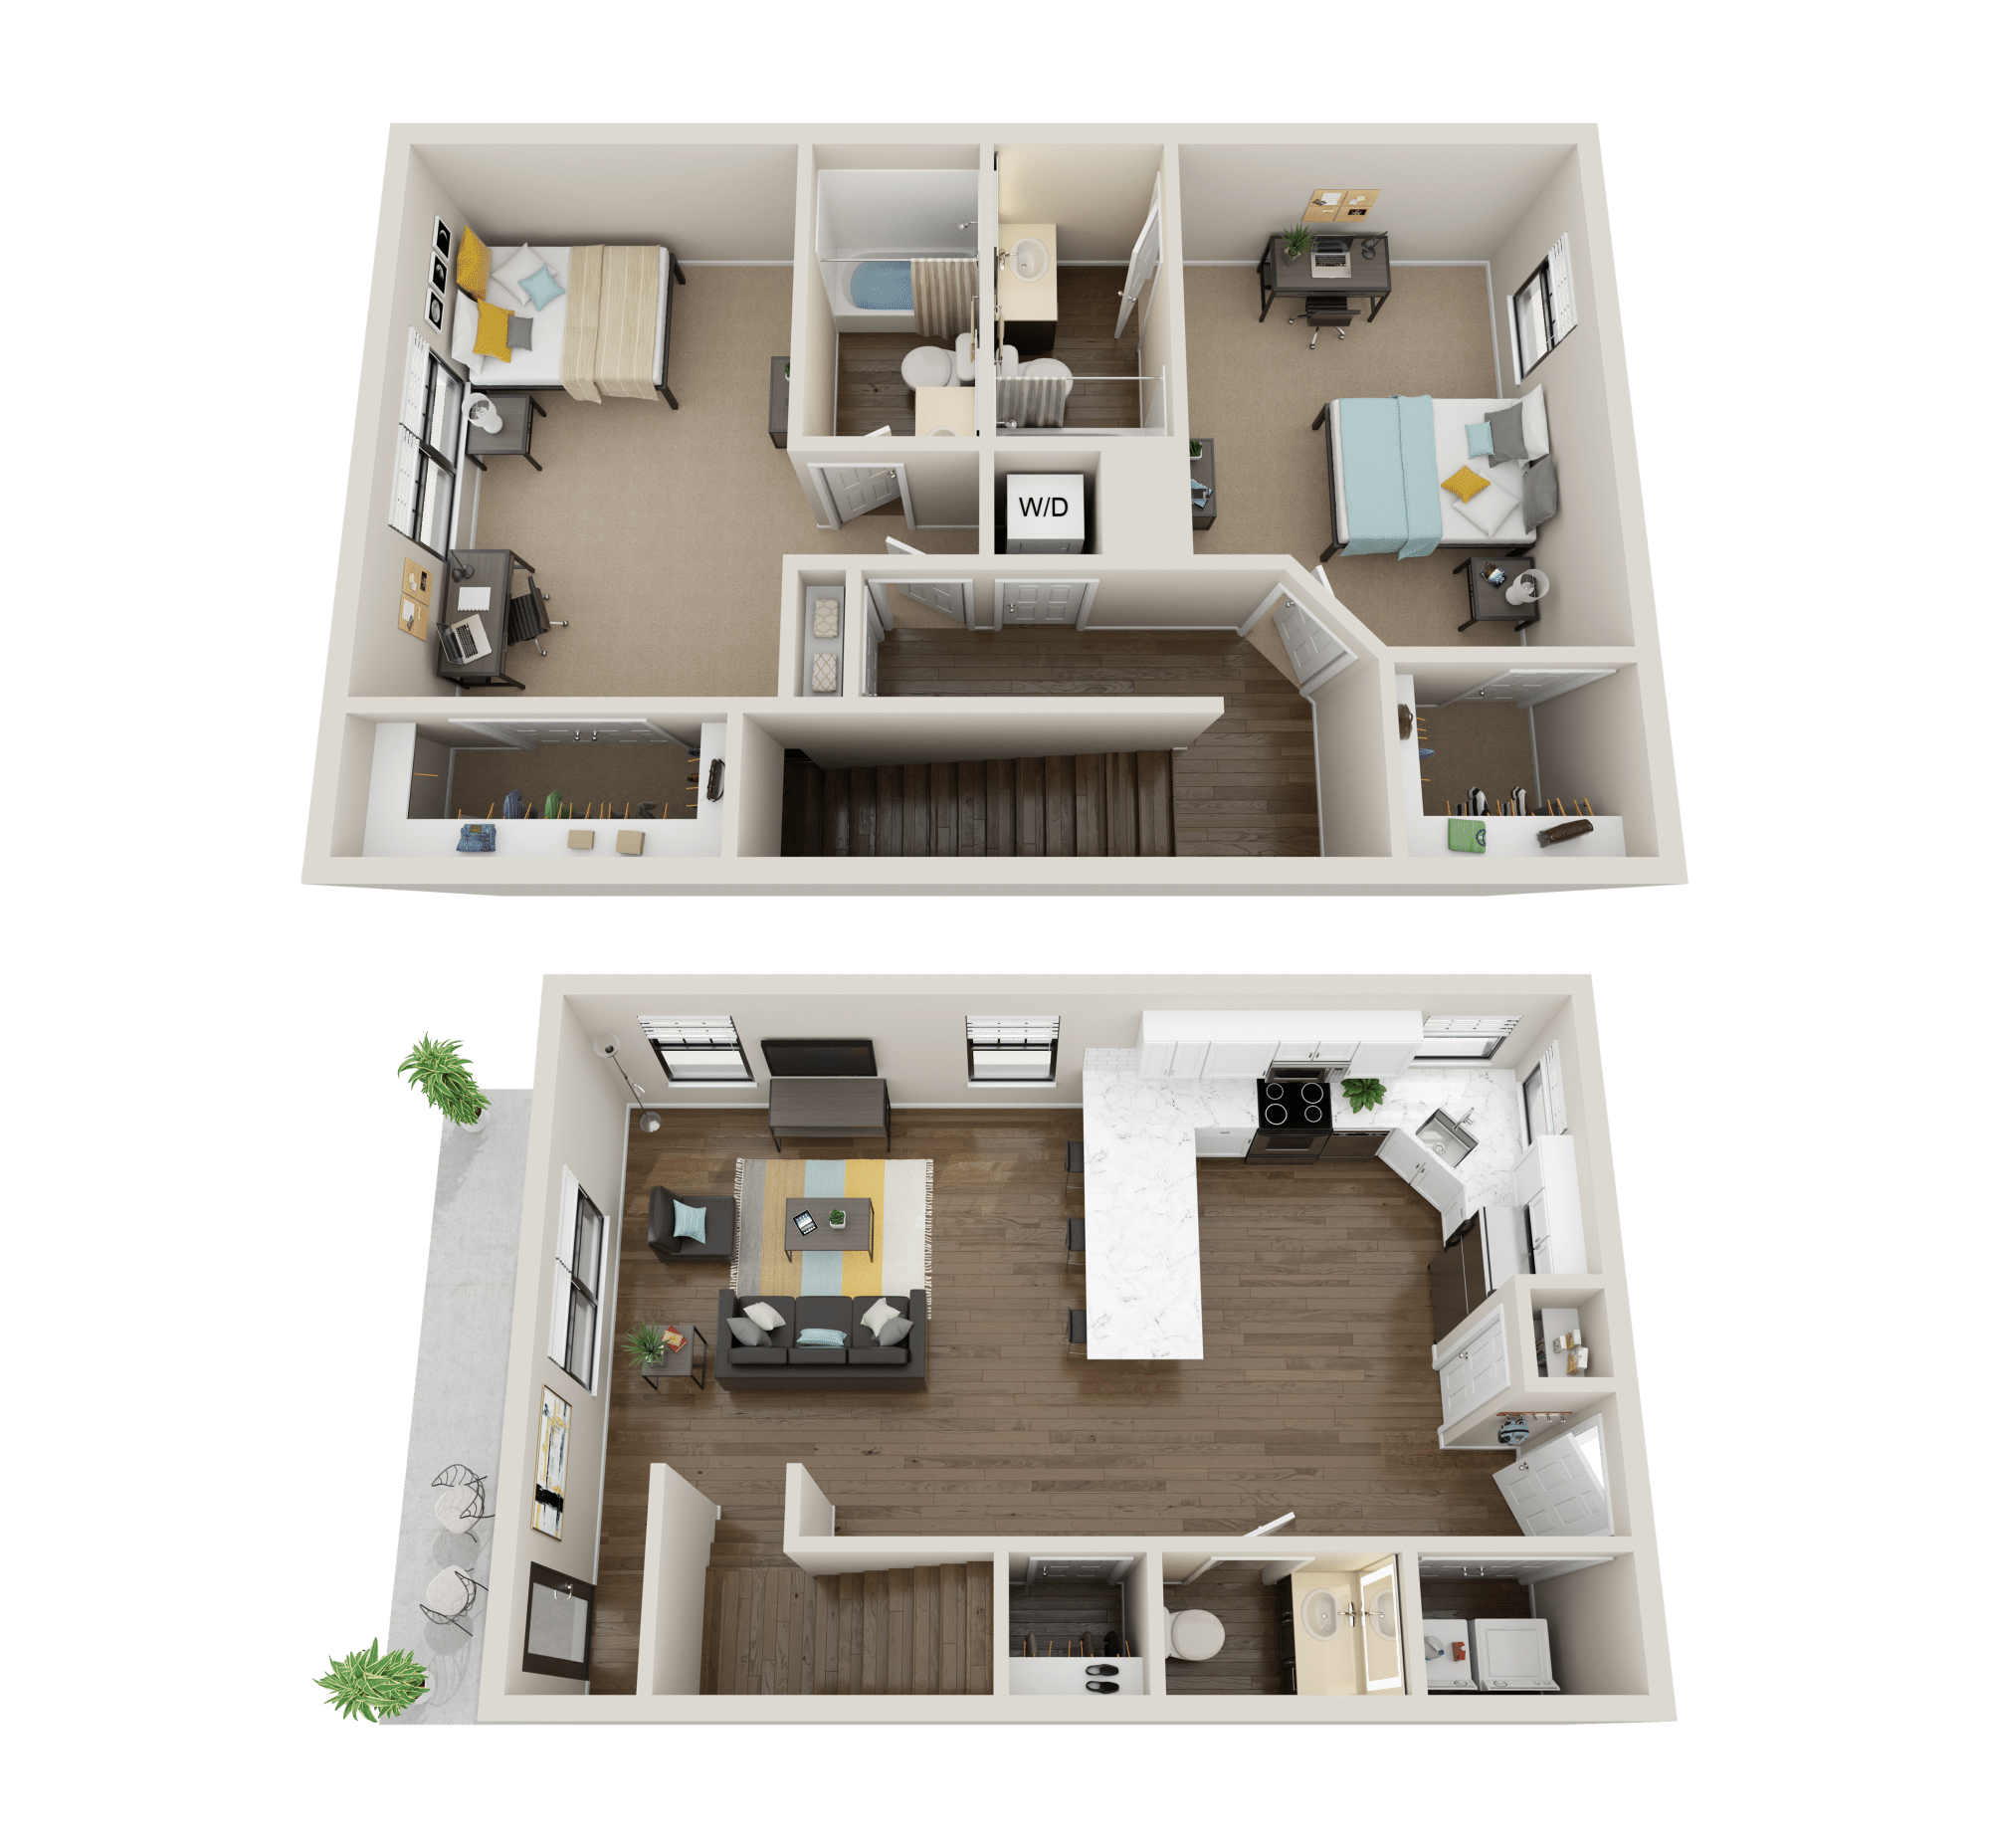 2x2.5 premium floor plan collective at clemson off campus apartments copy